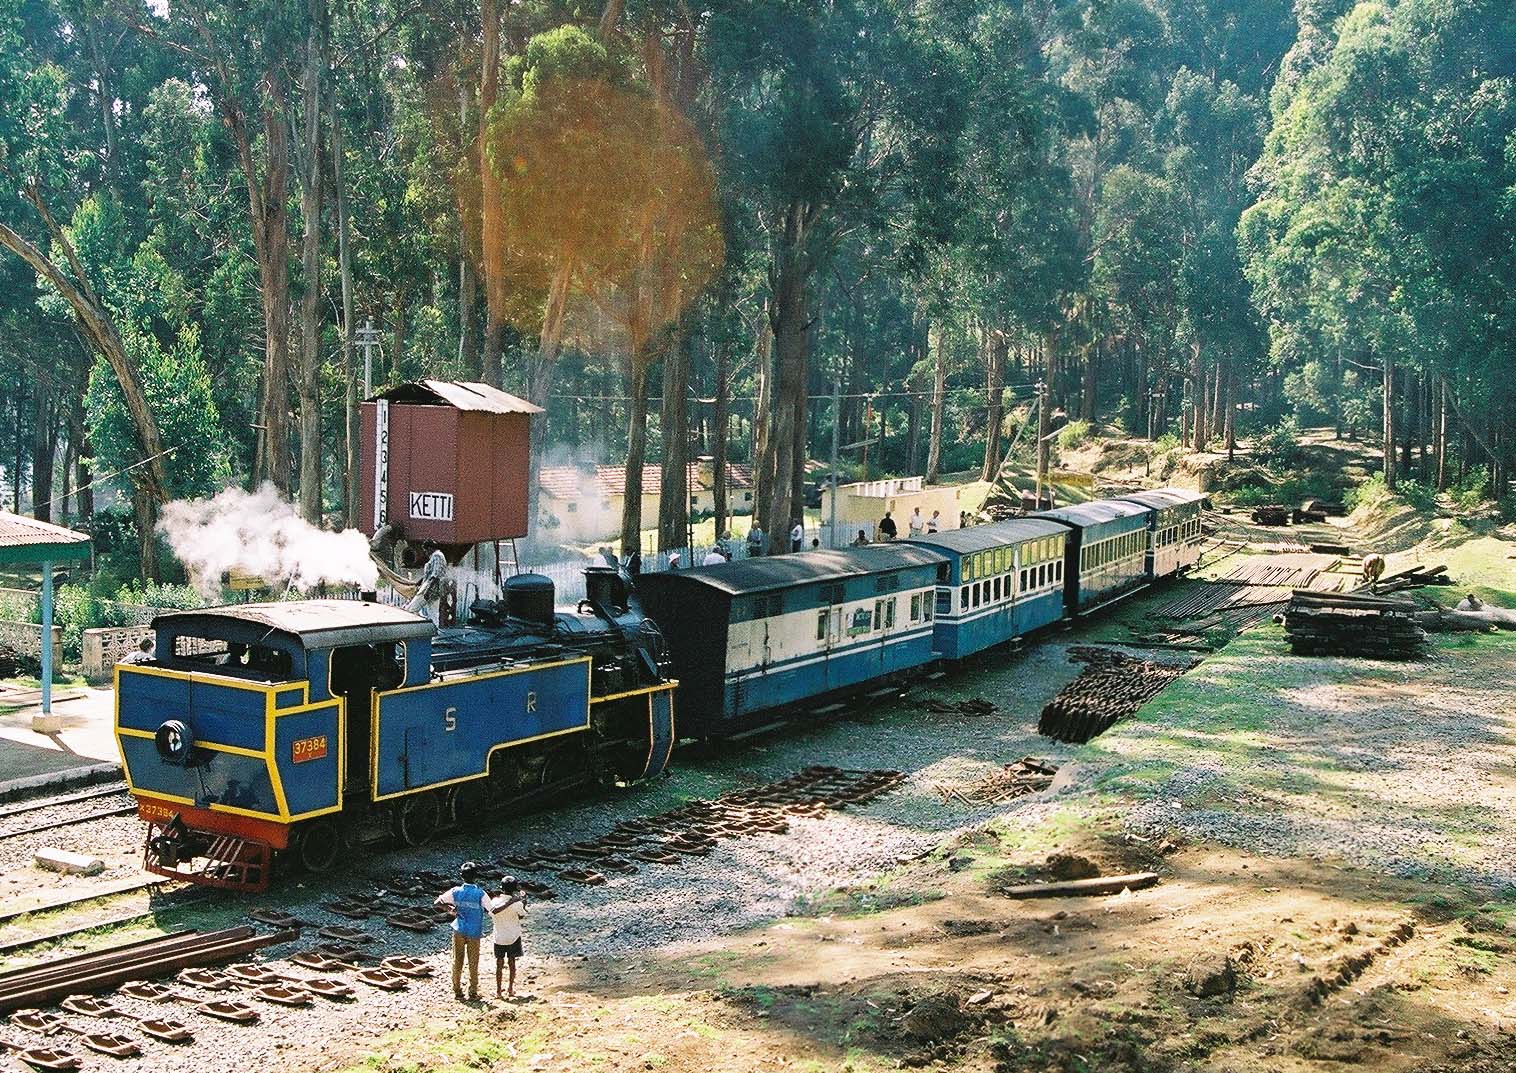 train_at_Ketti Indian train of nilgiri westren ghats